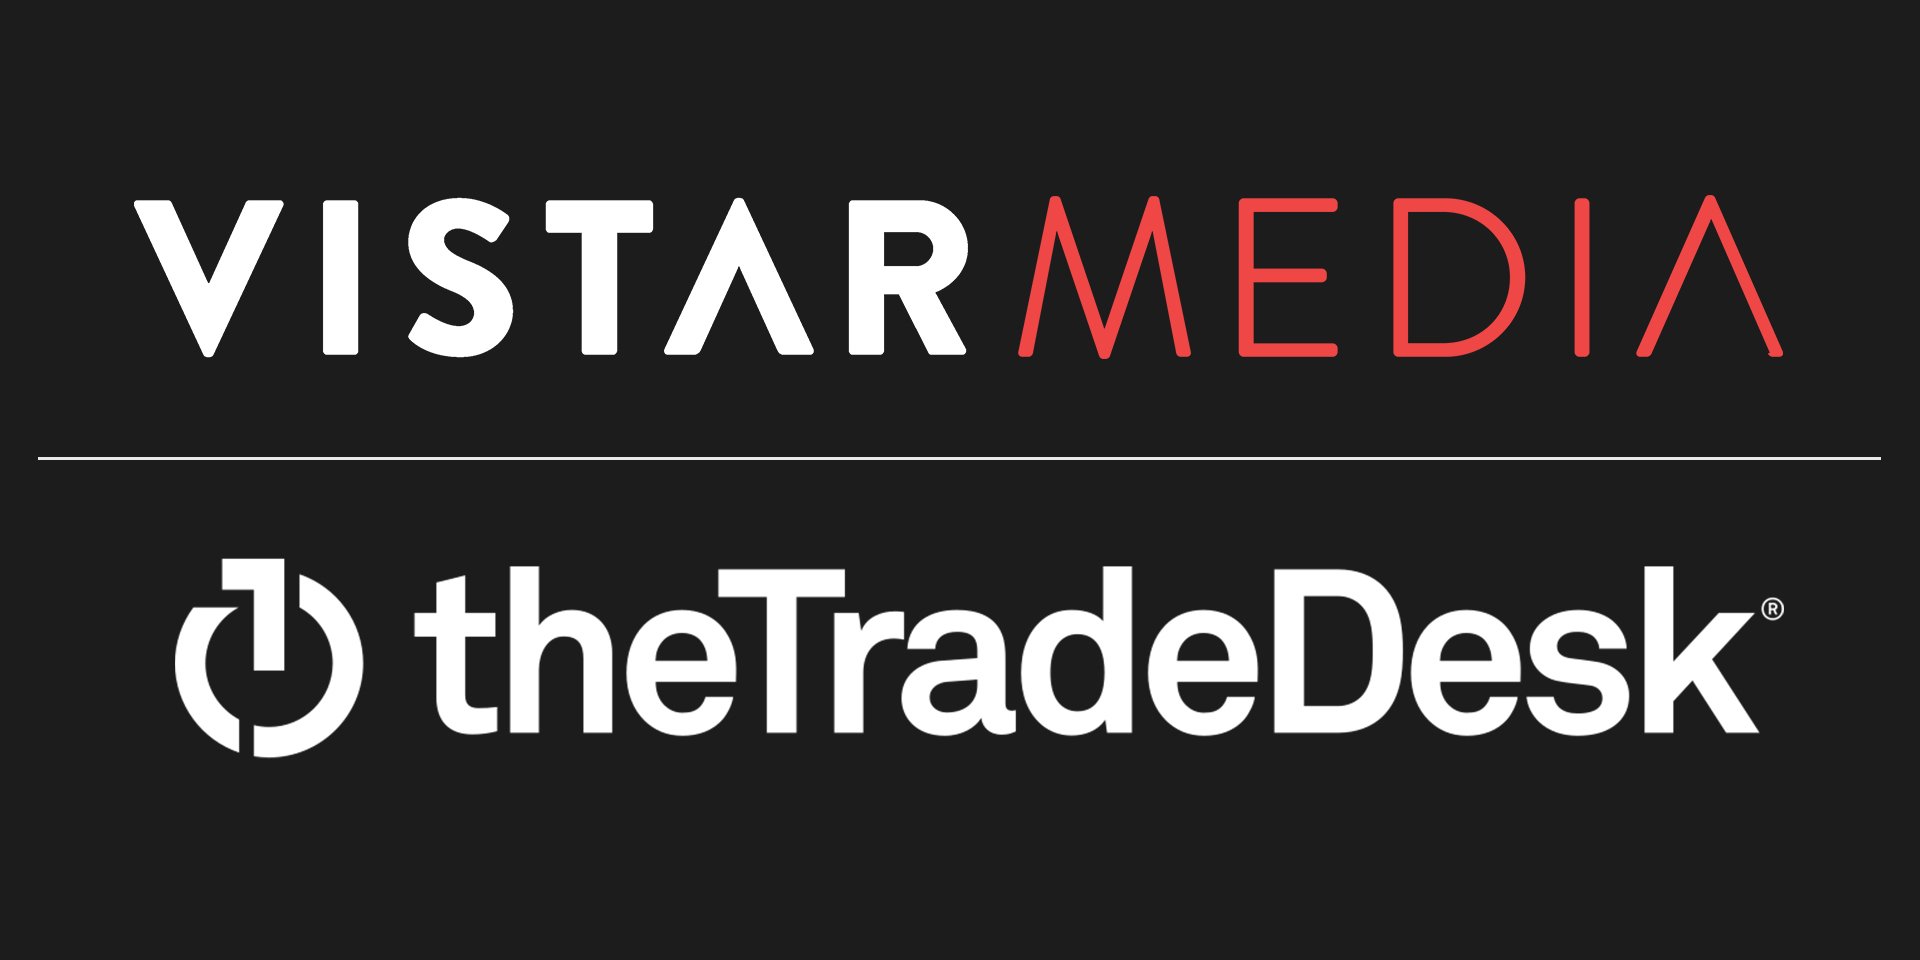 Vistar Media and The TradeDesk logos